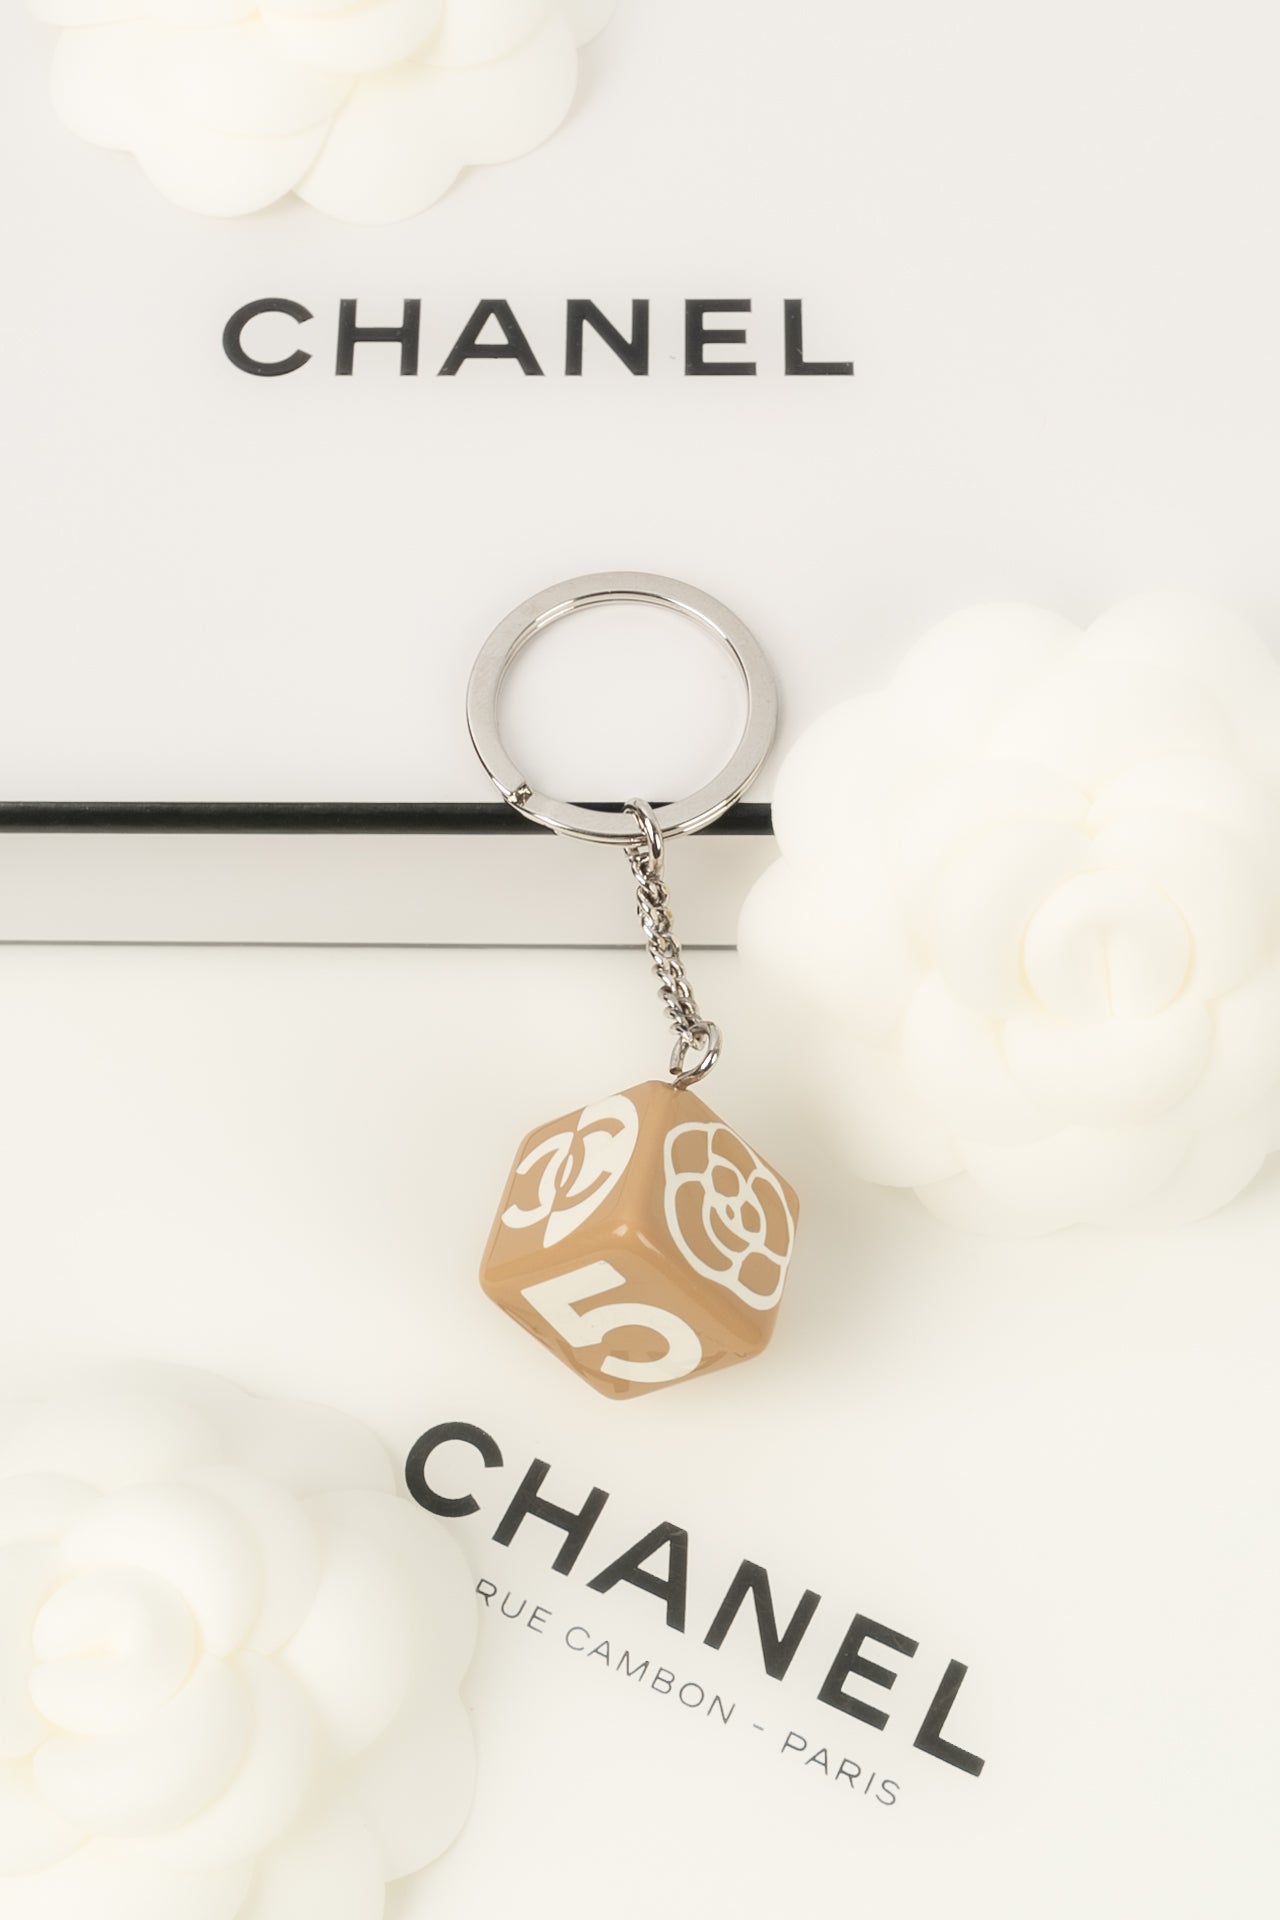 Chanel key ring